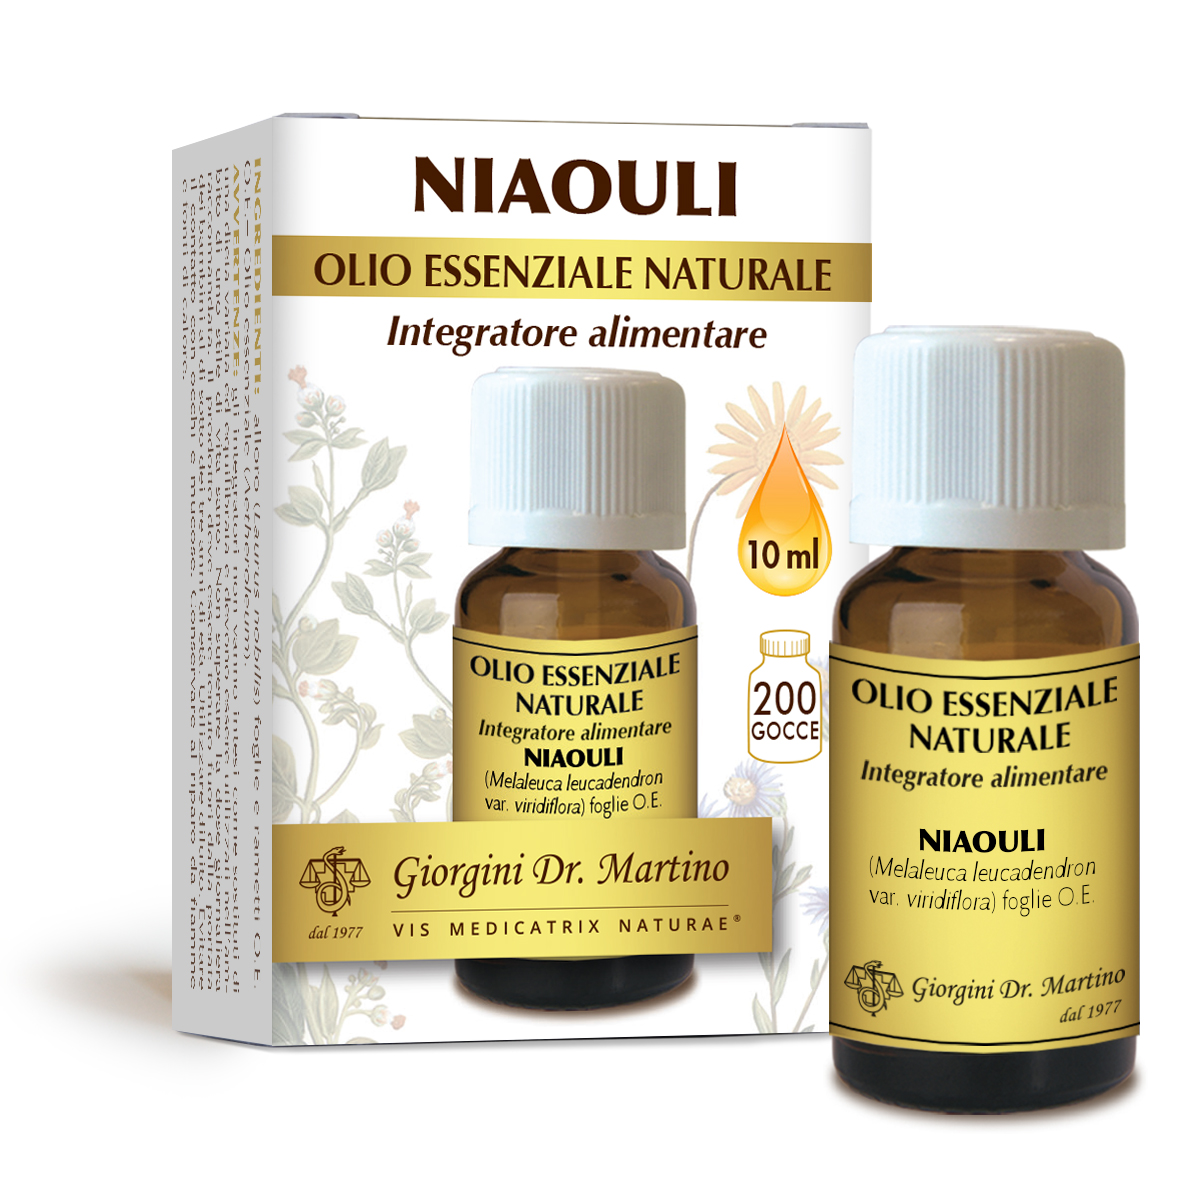 NIAOULI olio essenziale naturale 10 ml